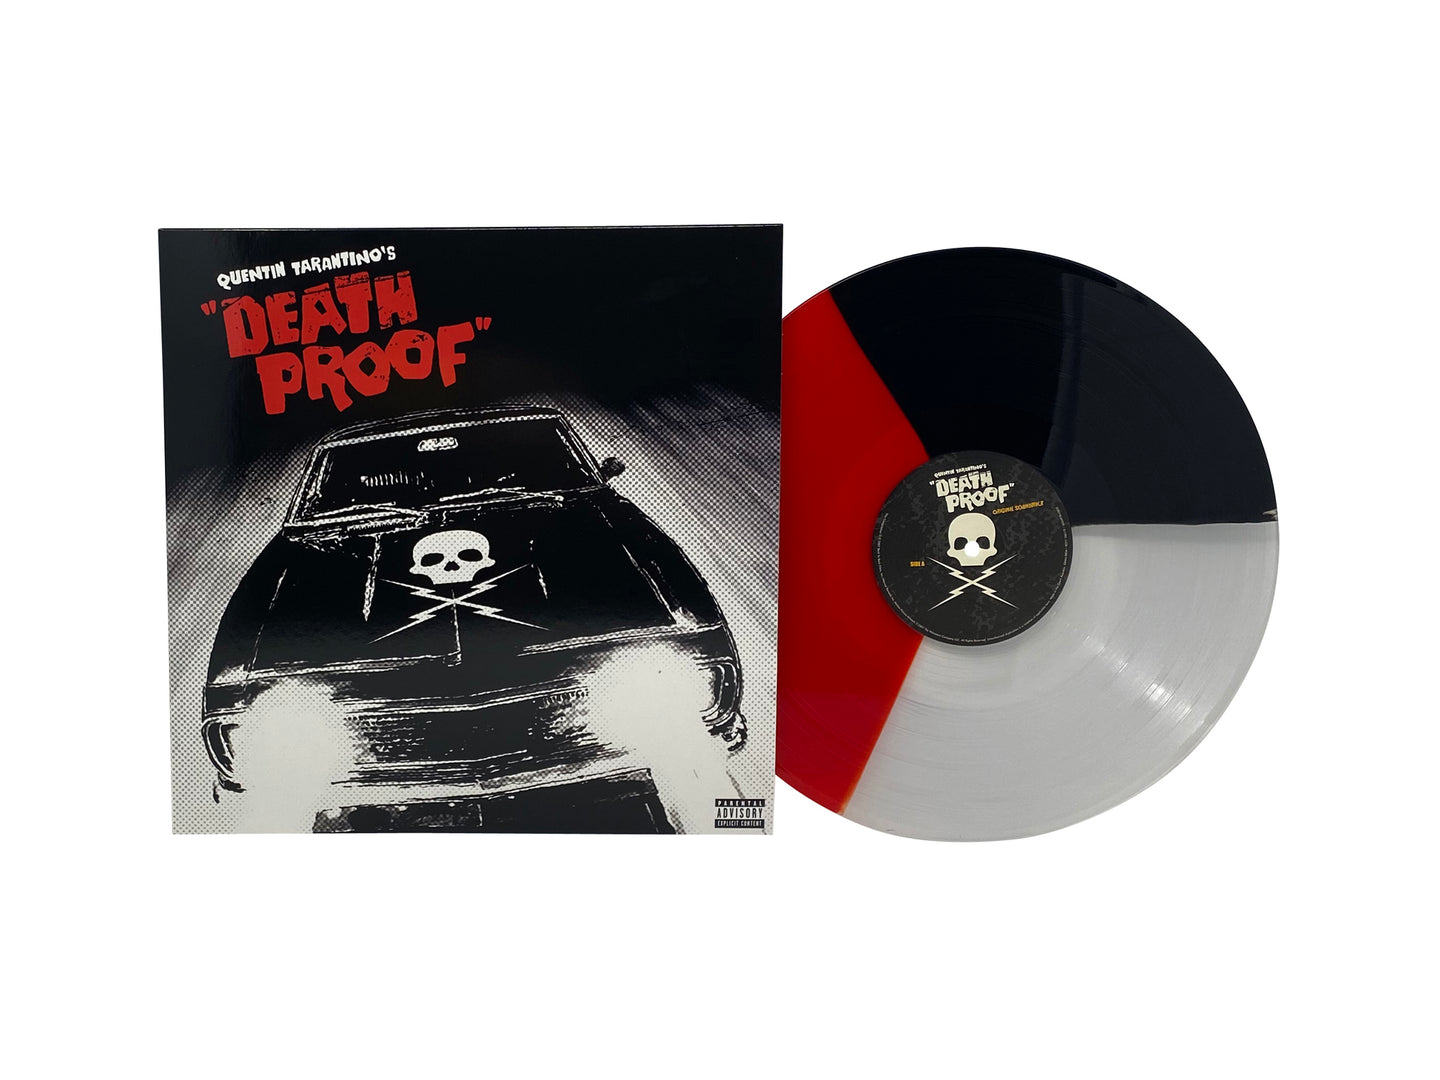 death proof soundtrack download 320 mp3